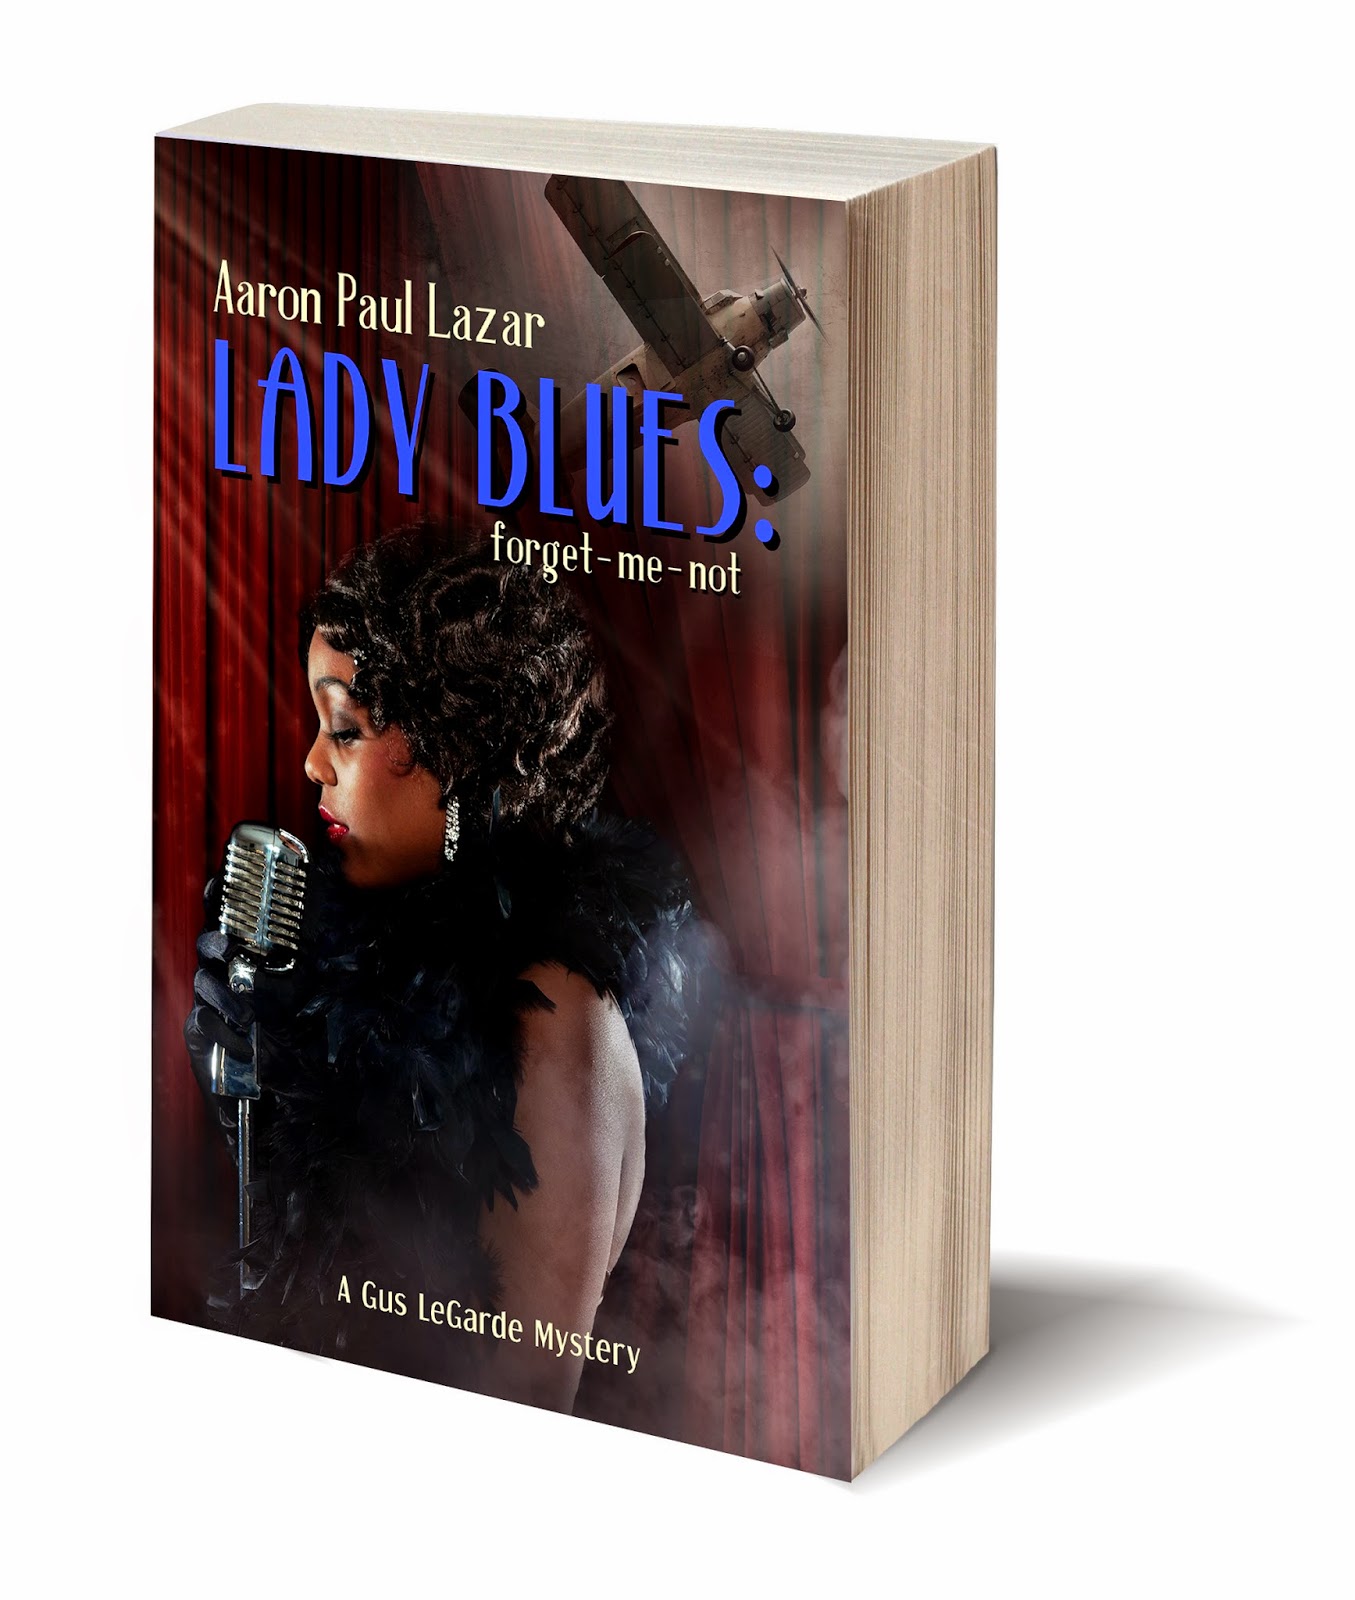 http://www.amazon.com/Lady-Blues-forget-me-not-LeGarde-Mysteries-ebook/dp/B00IS6EXG0/ref=sr_1_1?s=digital-text&ie=UTF8&qid=1406295793&sr=1-1&keywords=lady+blues